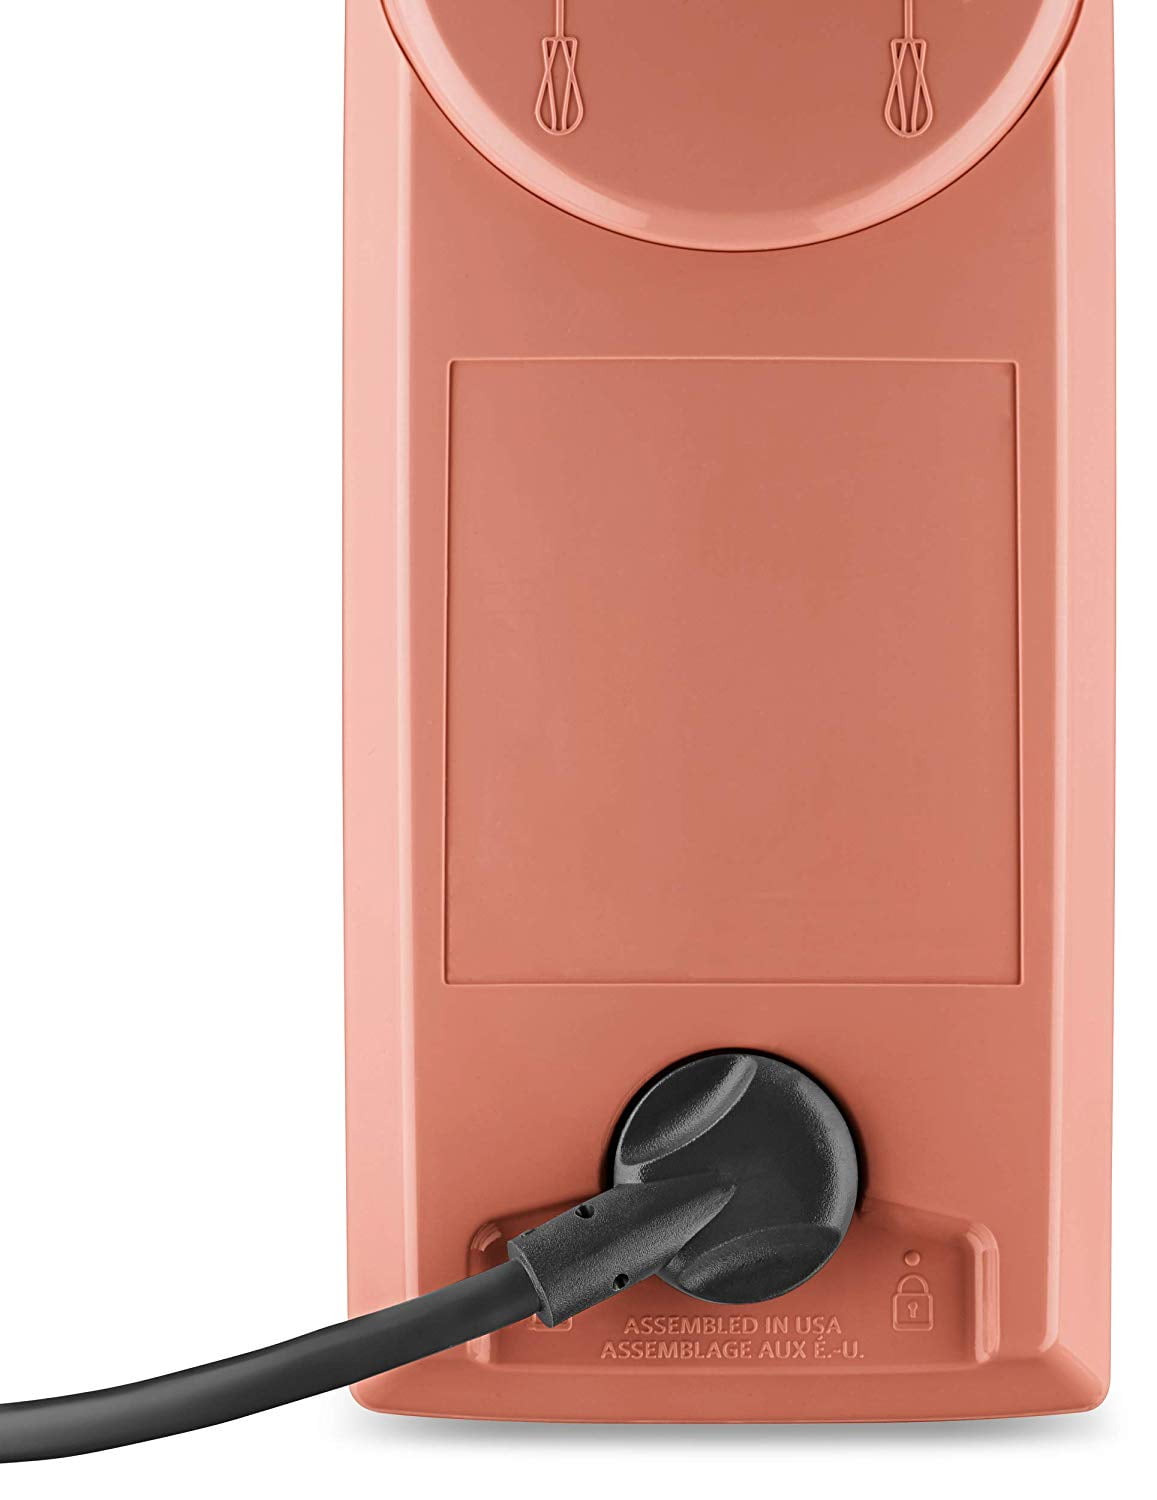 KitchenAid 9-Speed Hand Mixer, Tangerine (Certified Used) 